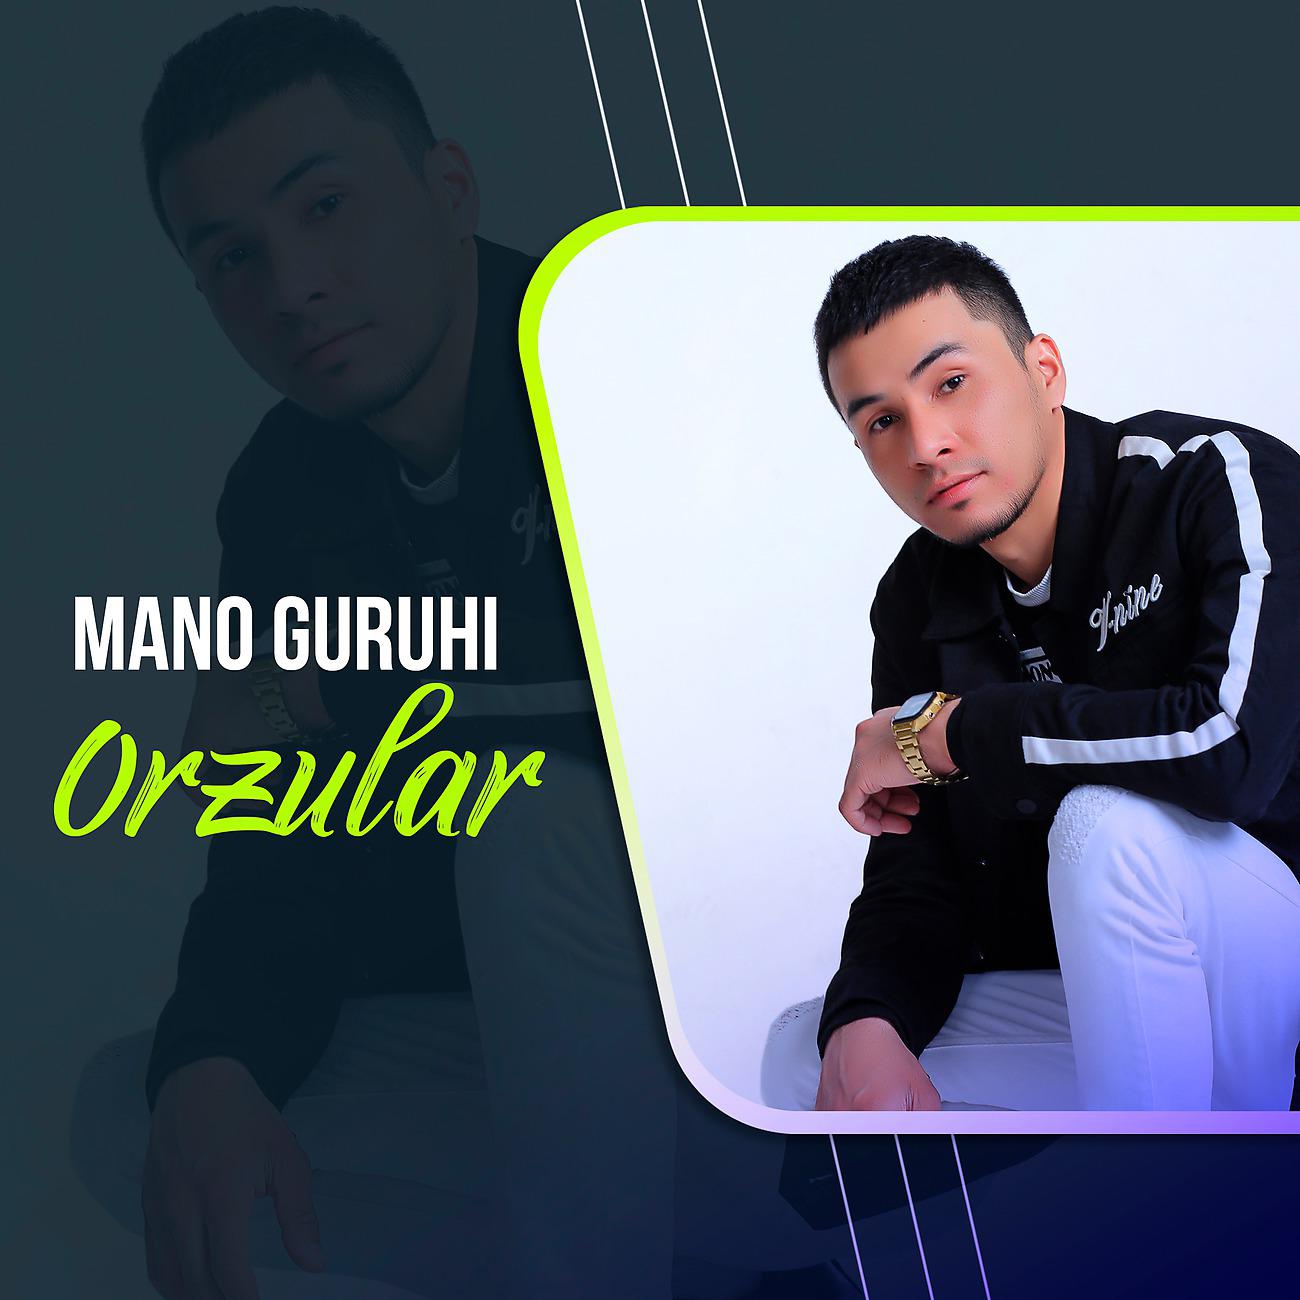 Постер альбома Orzular